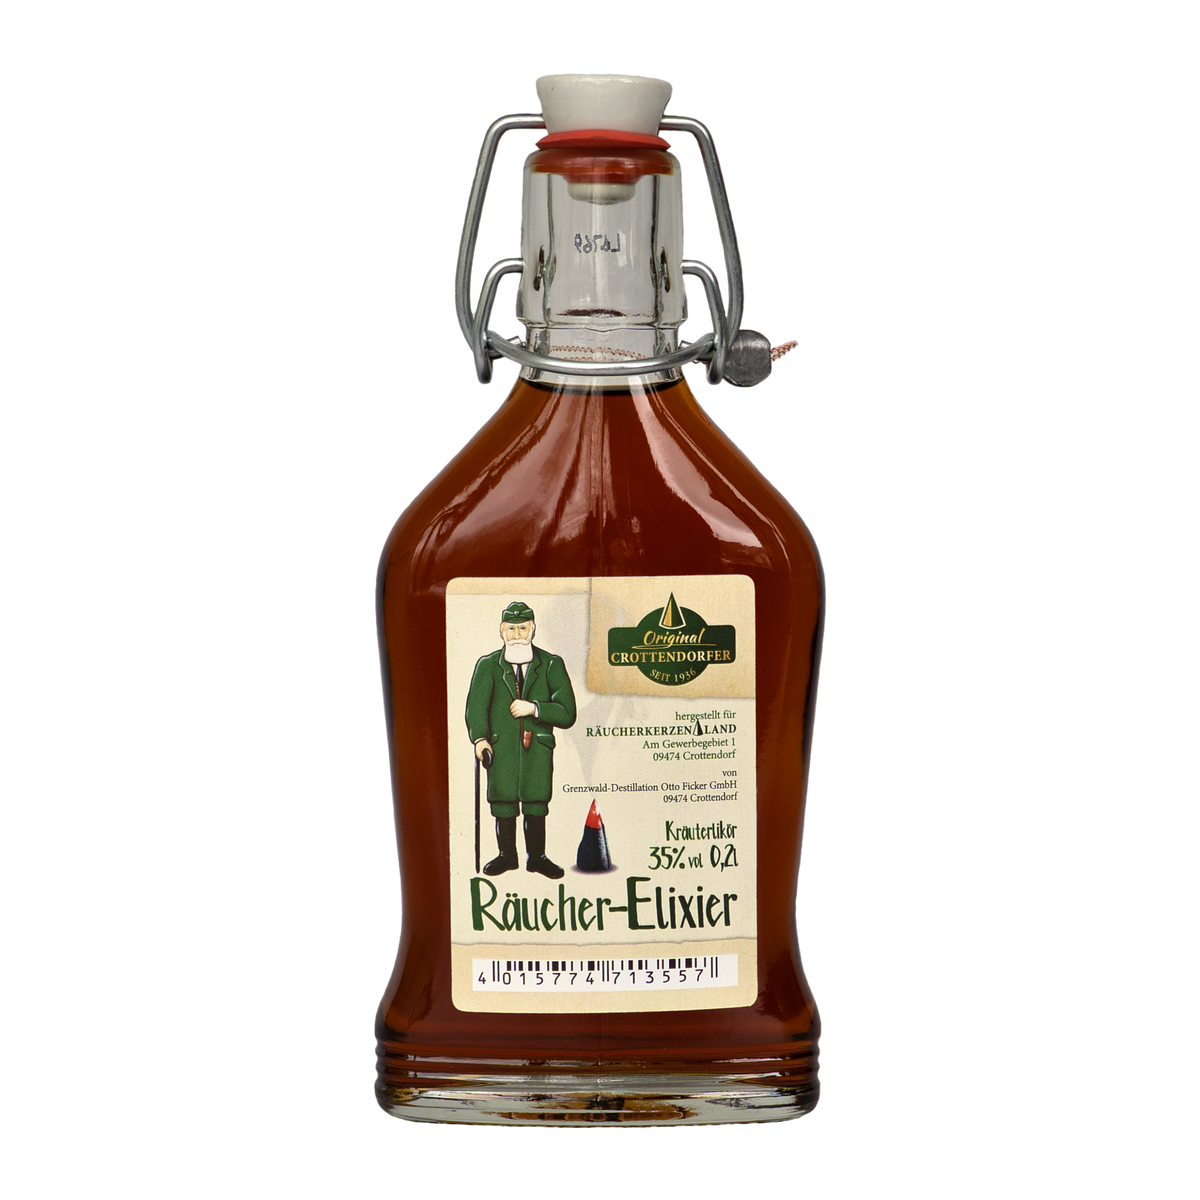 Räucher-Elixier 0,2l Bügelflasche – Original Crottendorfer